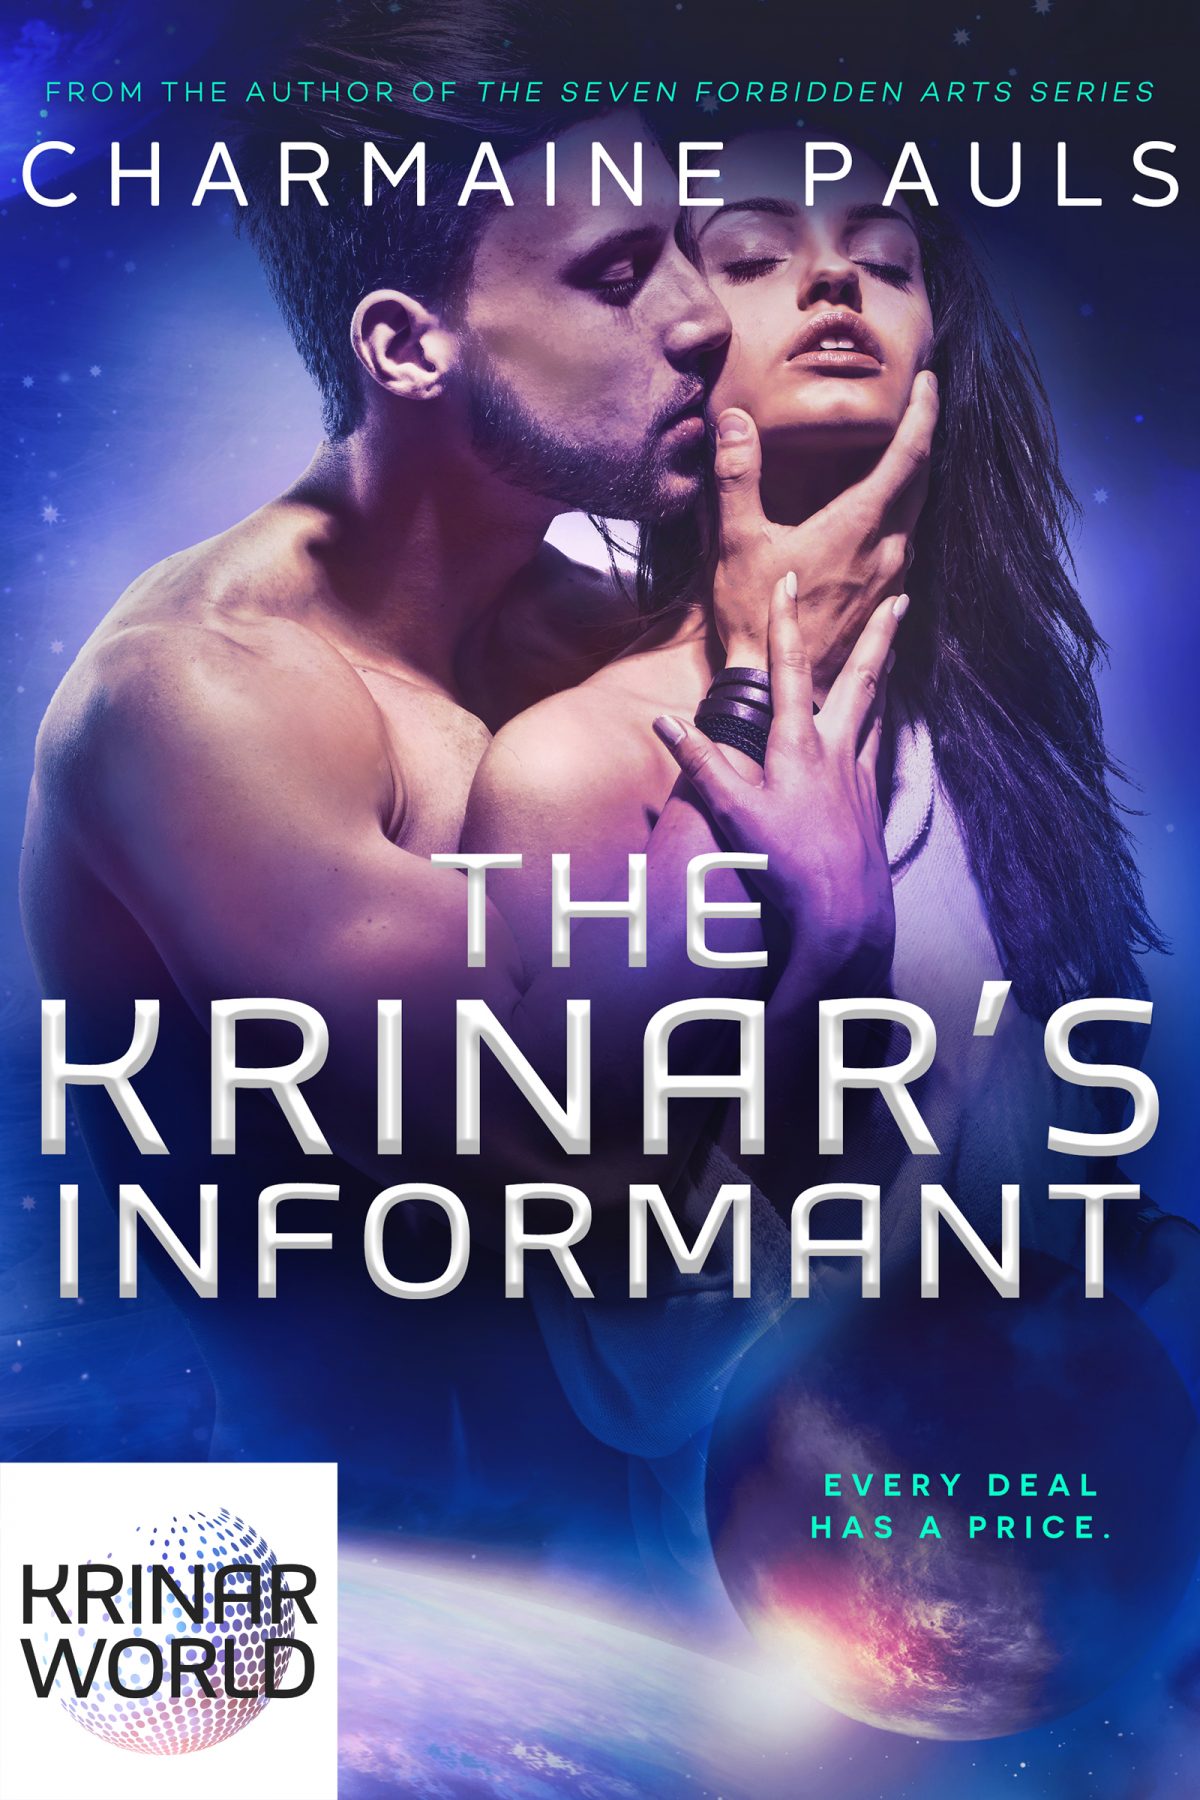 The Krinar's Informant, a steamy alien forced romance